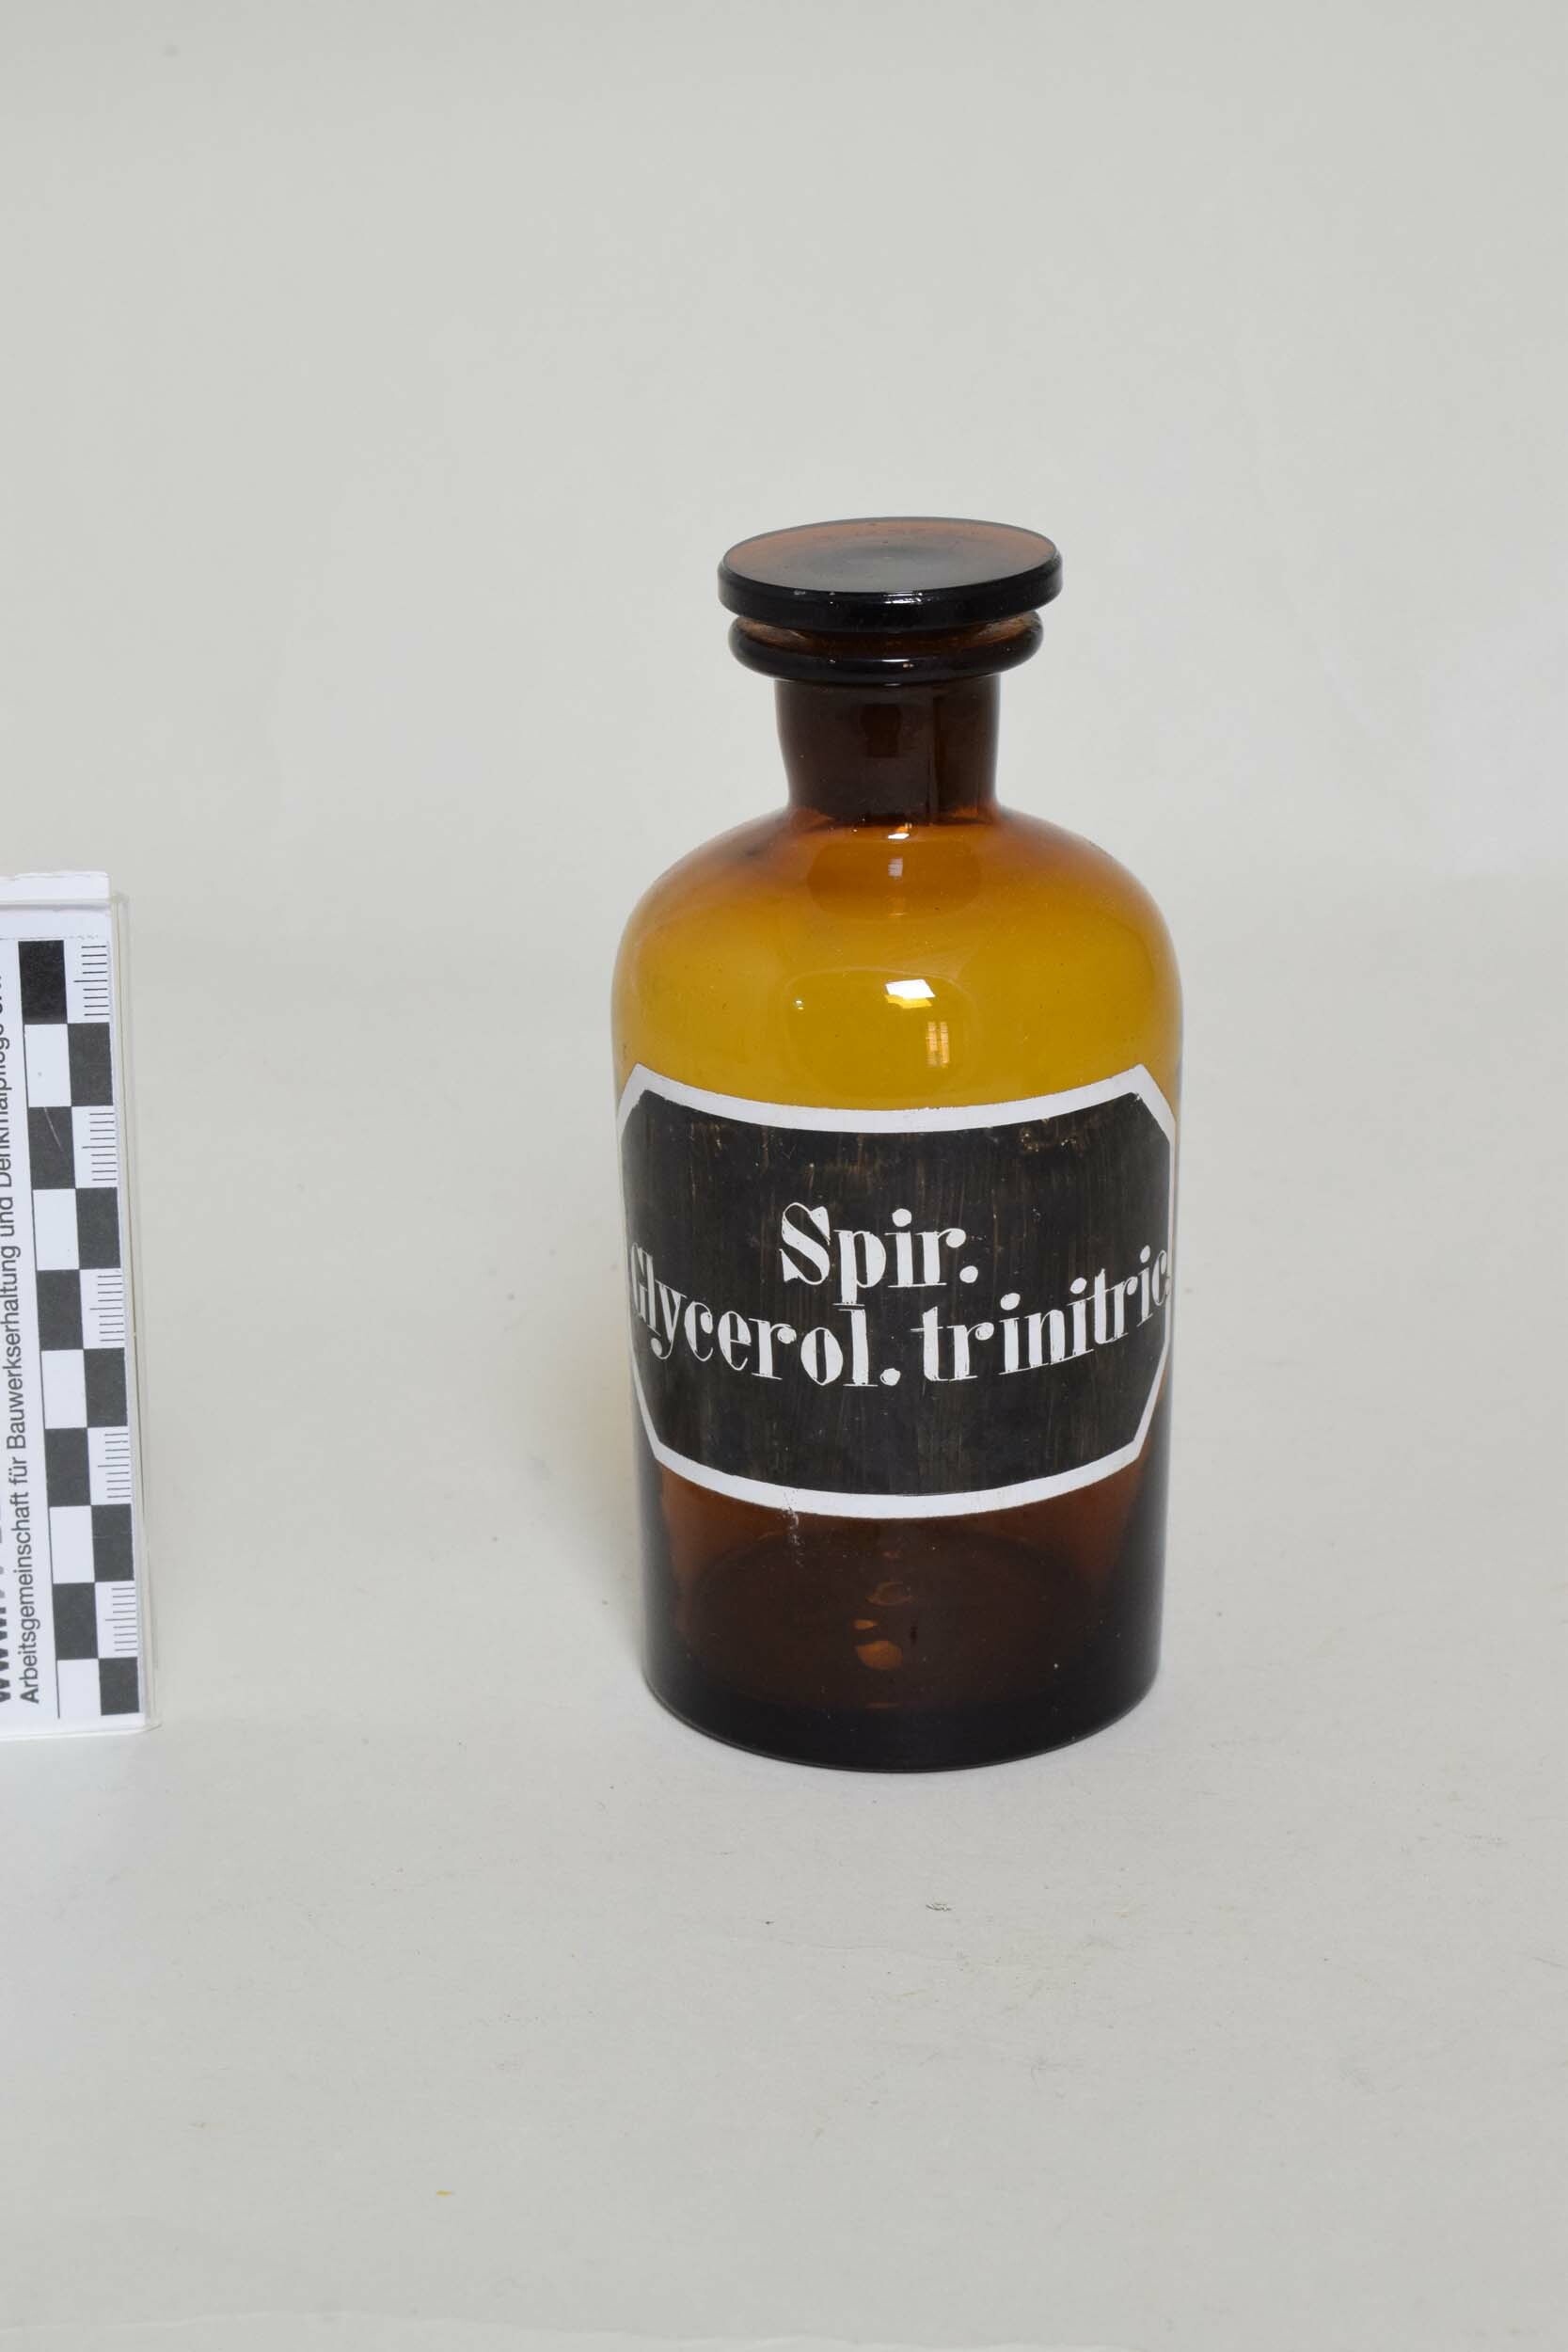 Apothekenflasche "Spir. Glycerol.btrinitric." (Heimatmuseum Dohna CC BY-NC-SA)